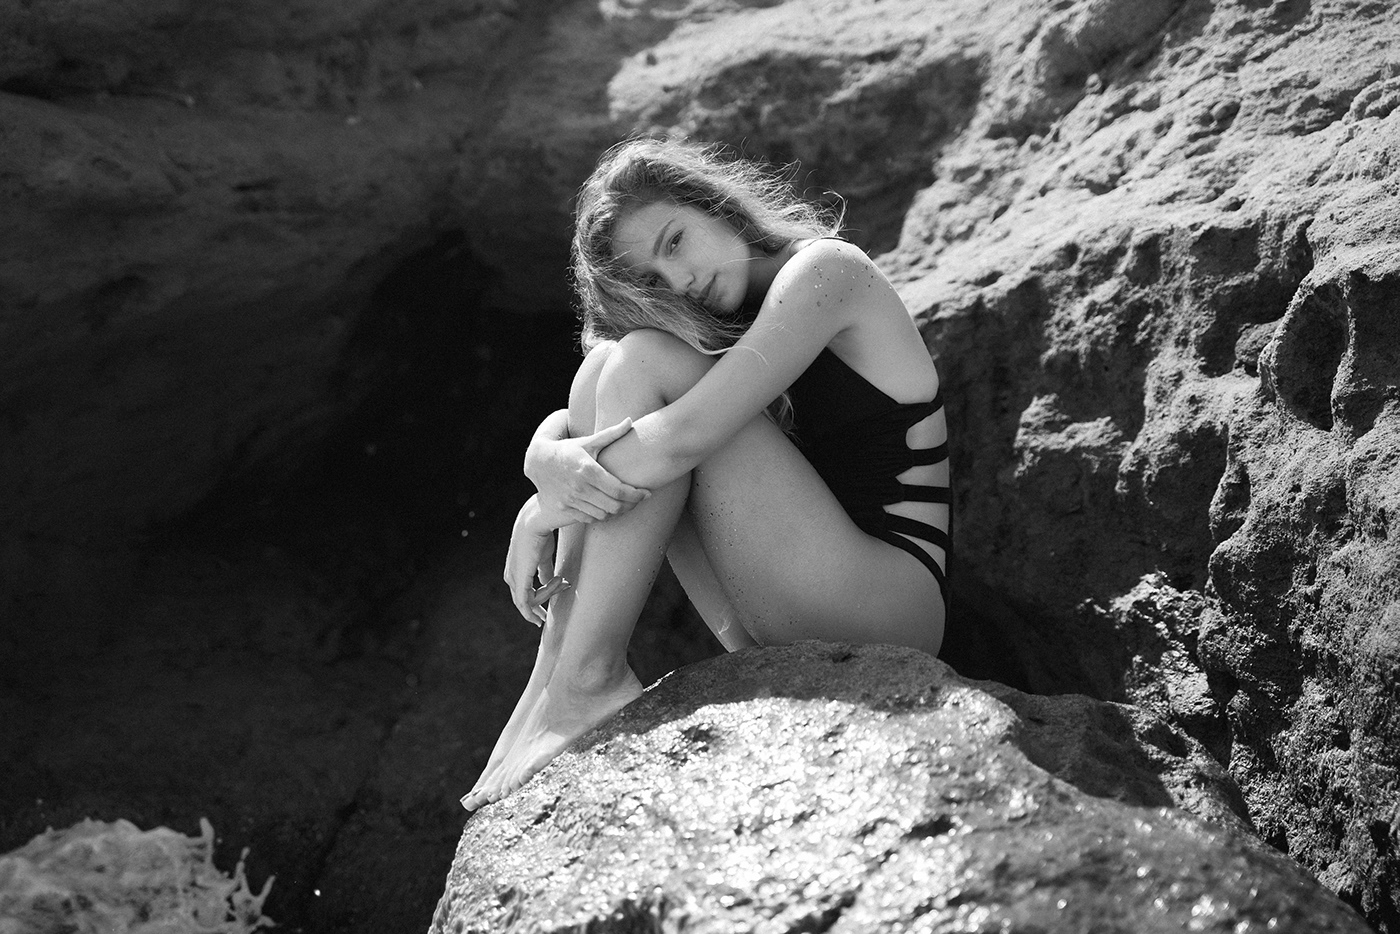 BW photography portrait beach rocks atmosphere black and white analog summer mood